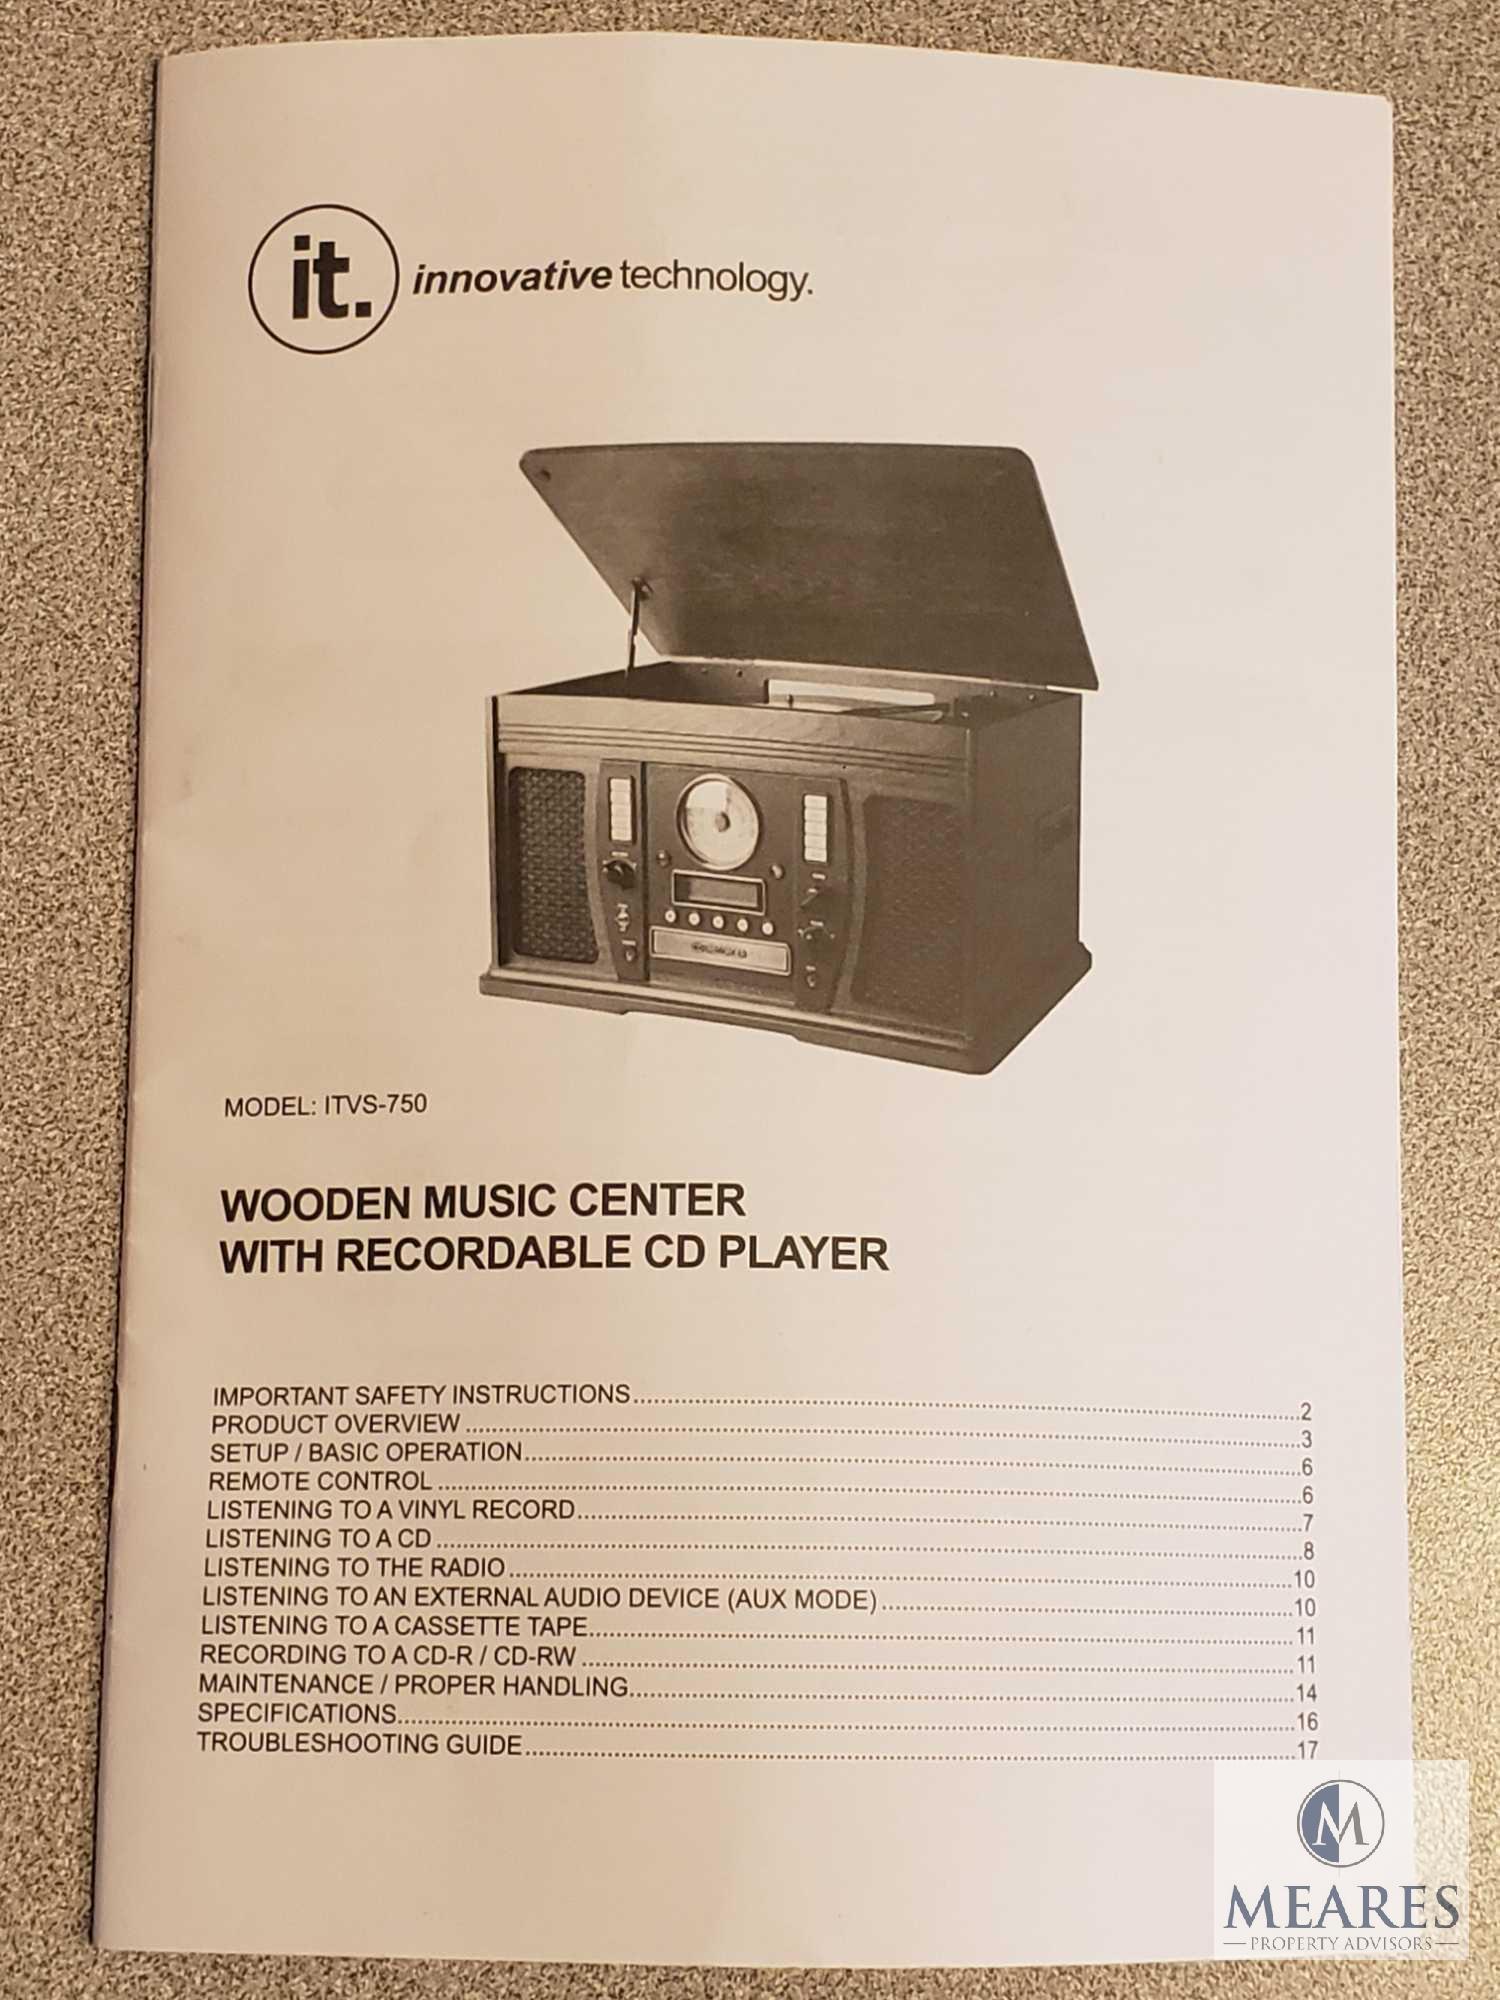 New Retro-Style Wooden Music Center